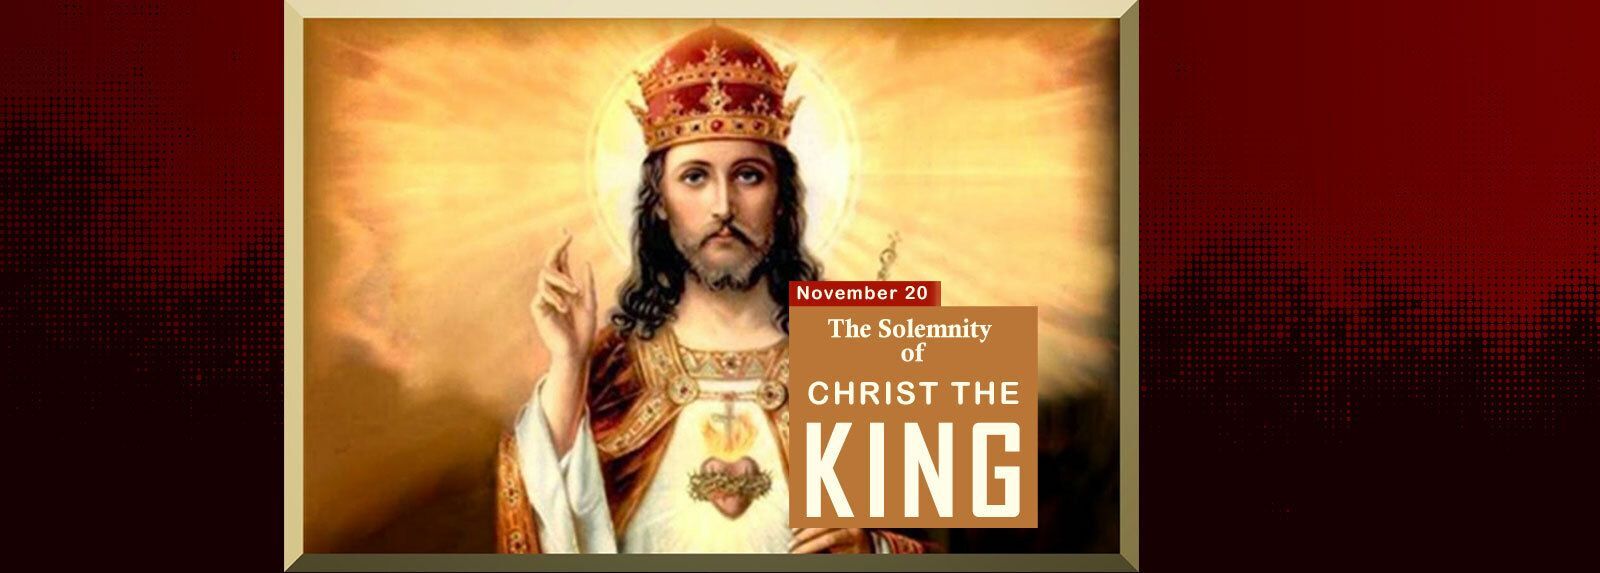 Solemnity of Christ the King, Sunday, November 20